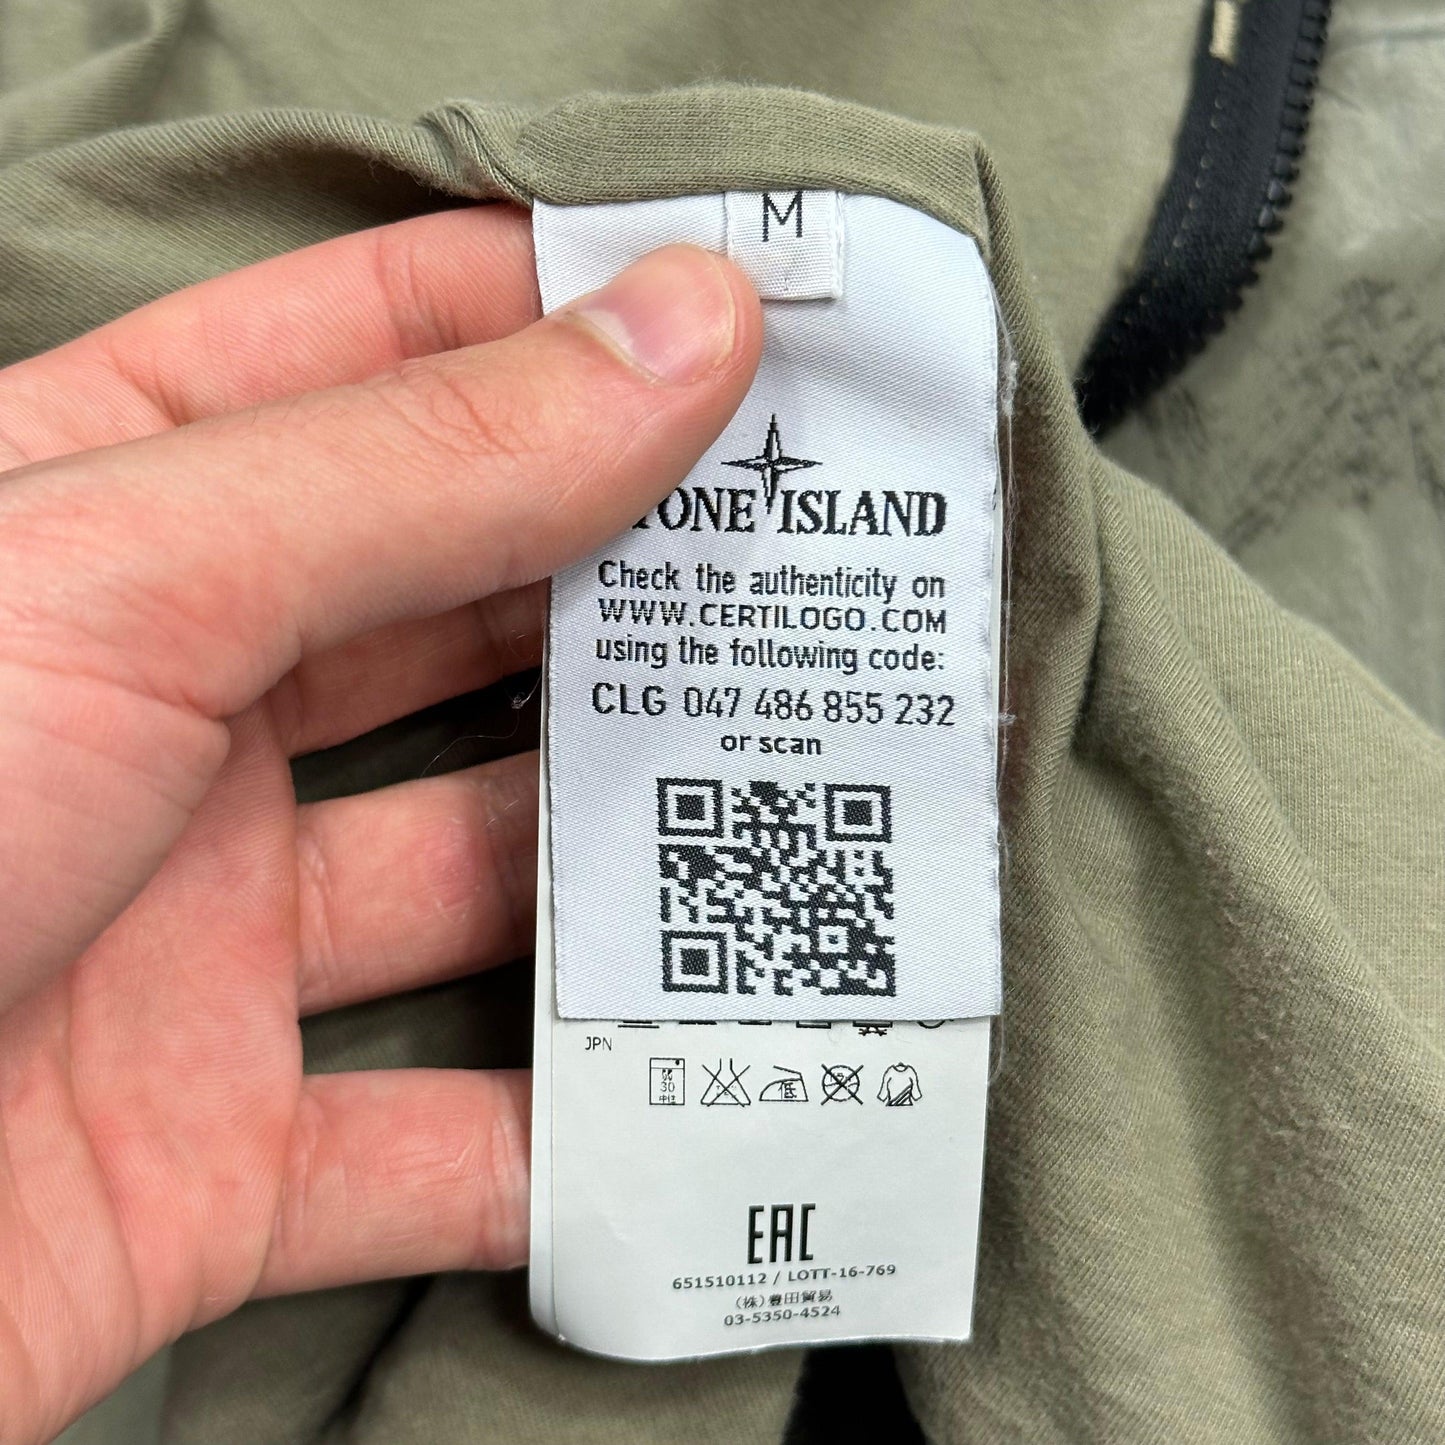 Stone Island Khaki Nylon Metal Overshirt Jacket - M - Known Source